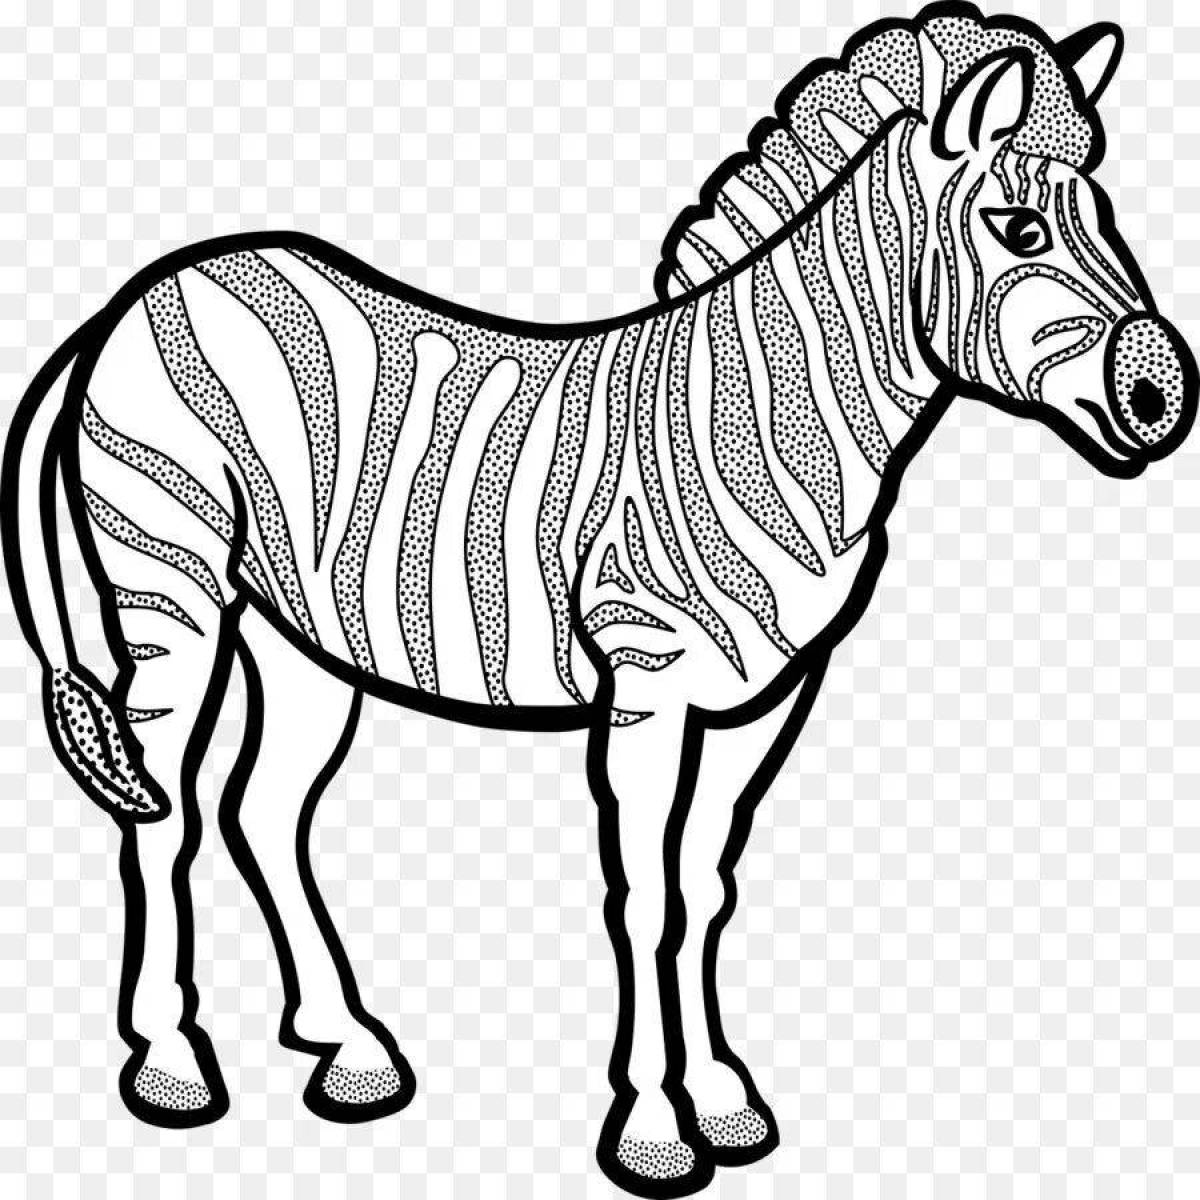 Zebra pattern #4